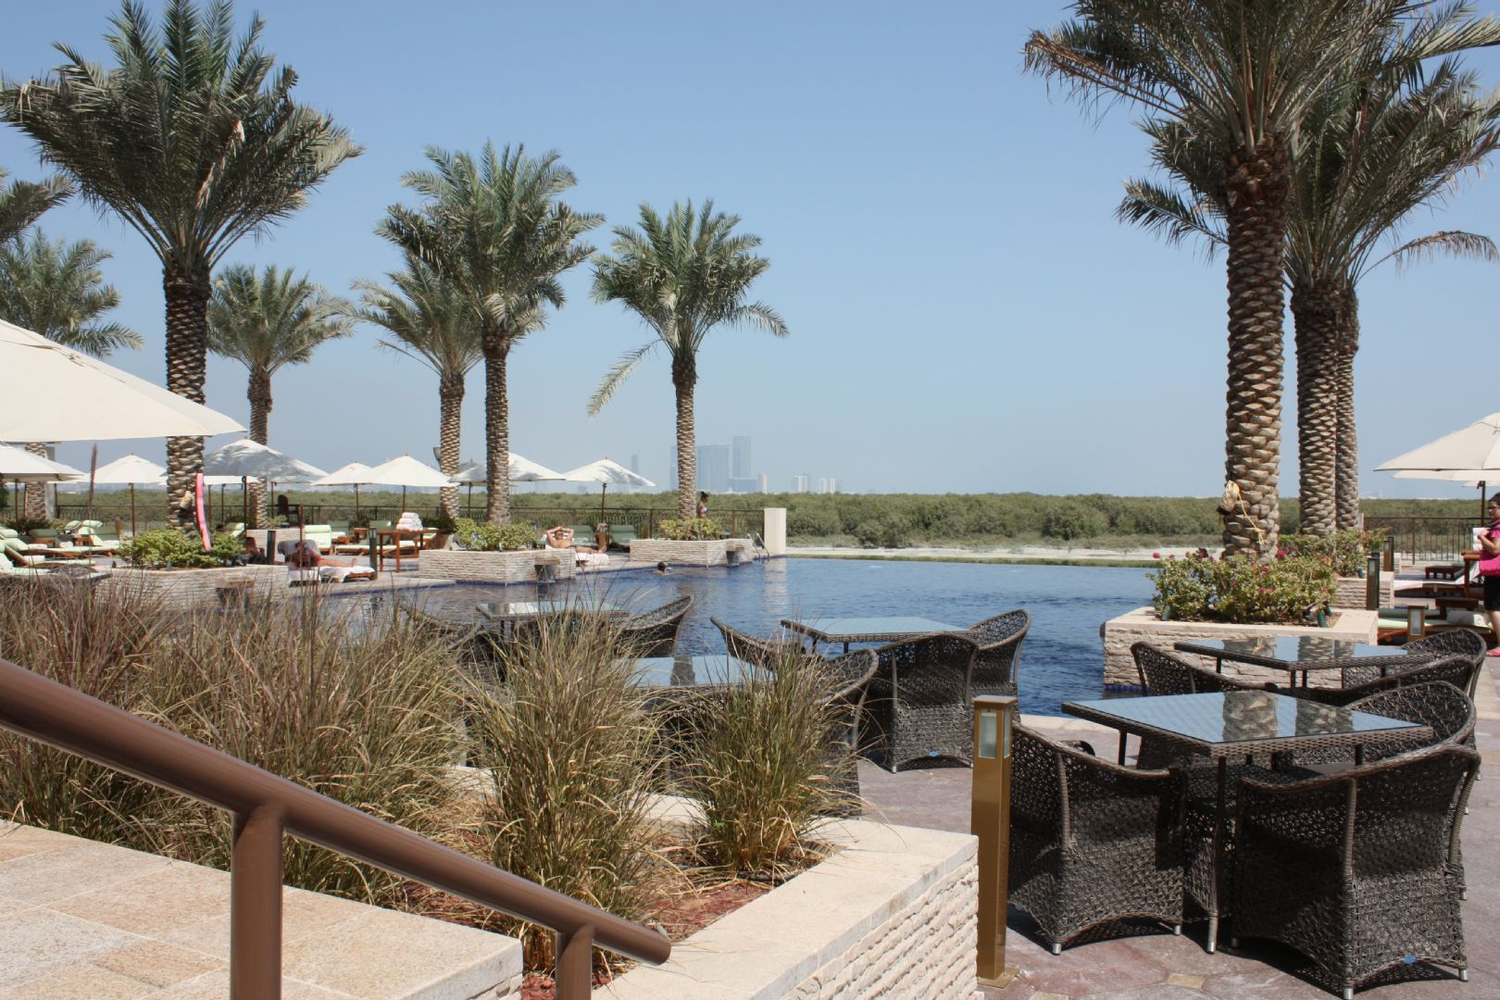 HOTELTIPP Abu Dhabi